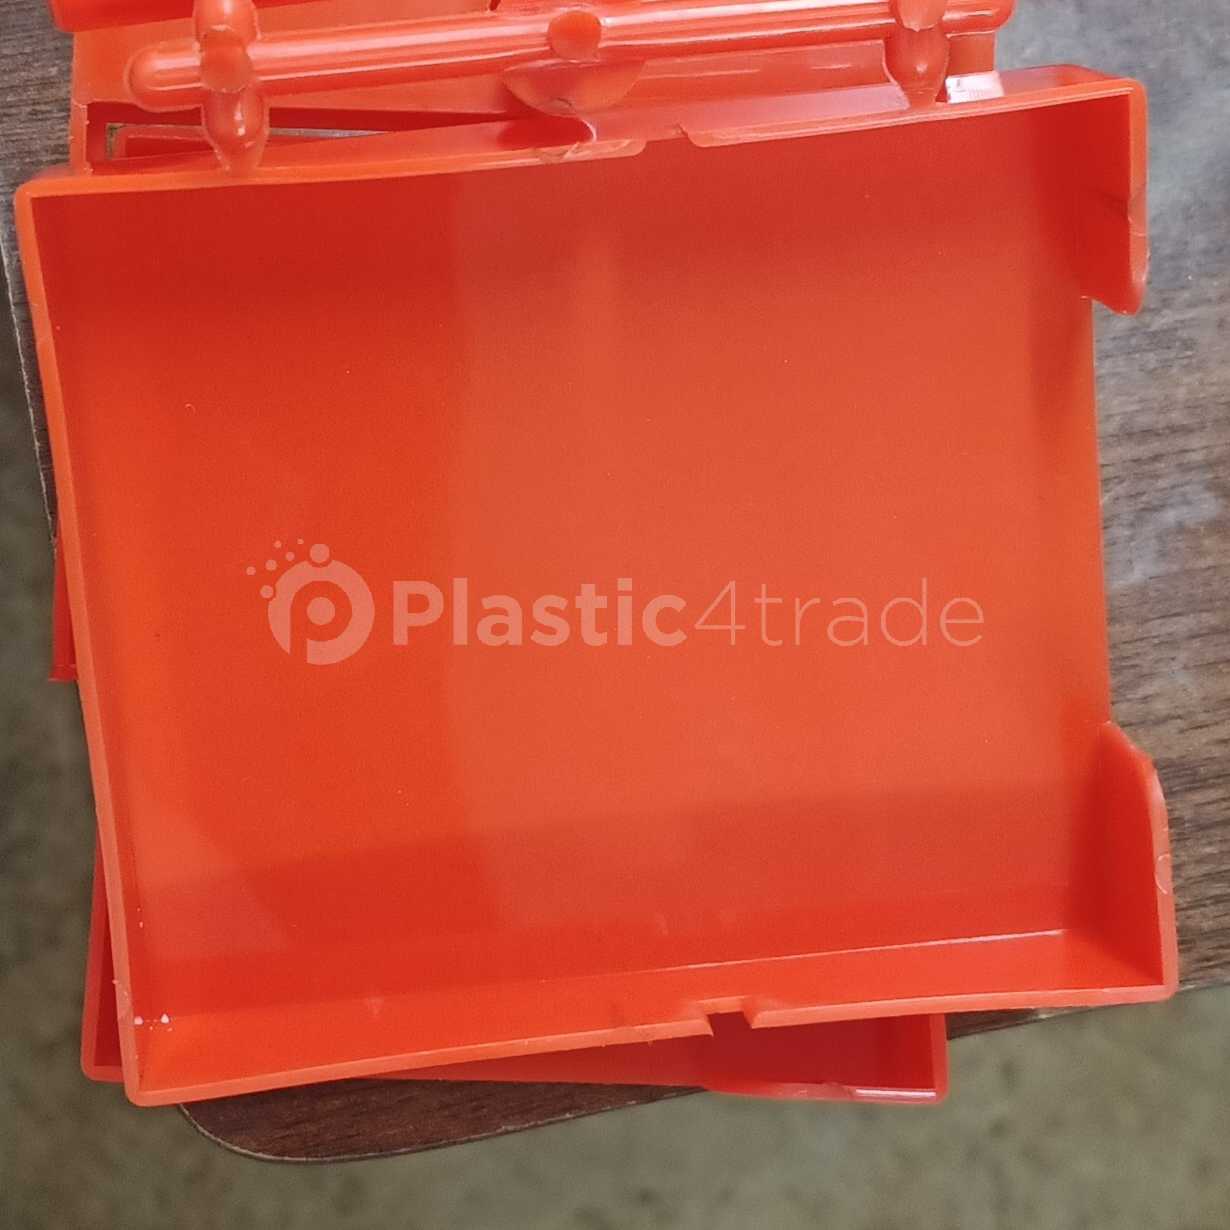 PVC PIPE PVC Resin Pipe uttar pradesh india Plastic4trade